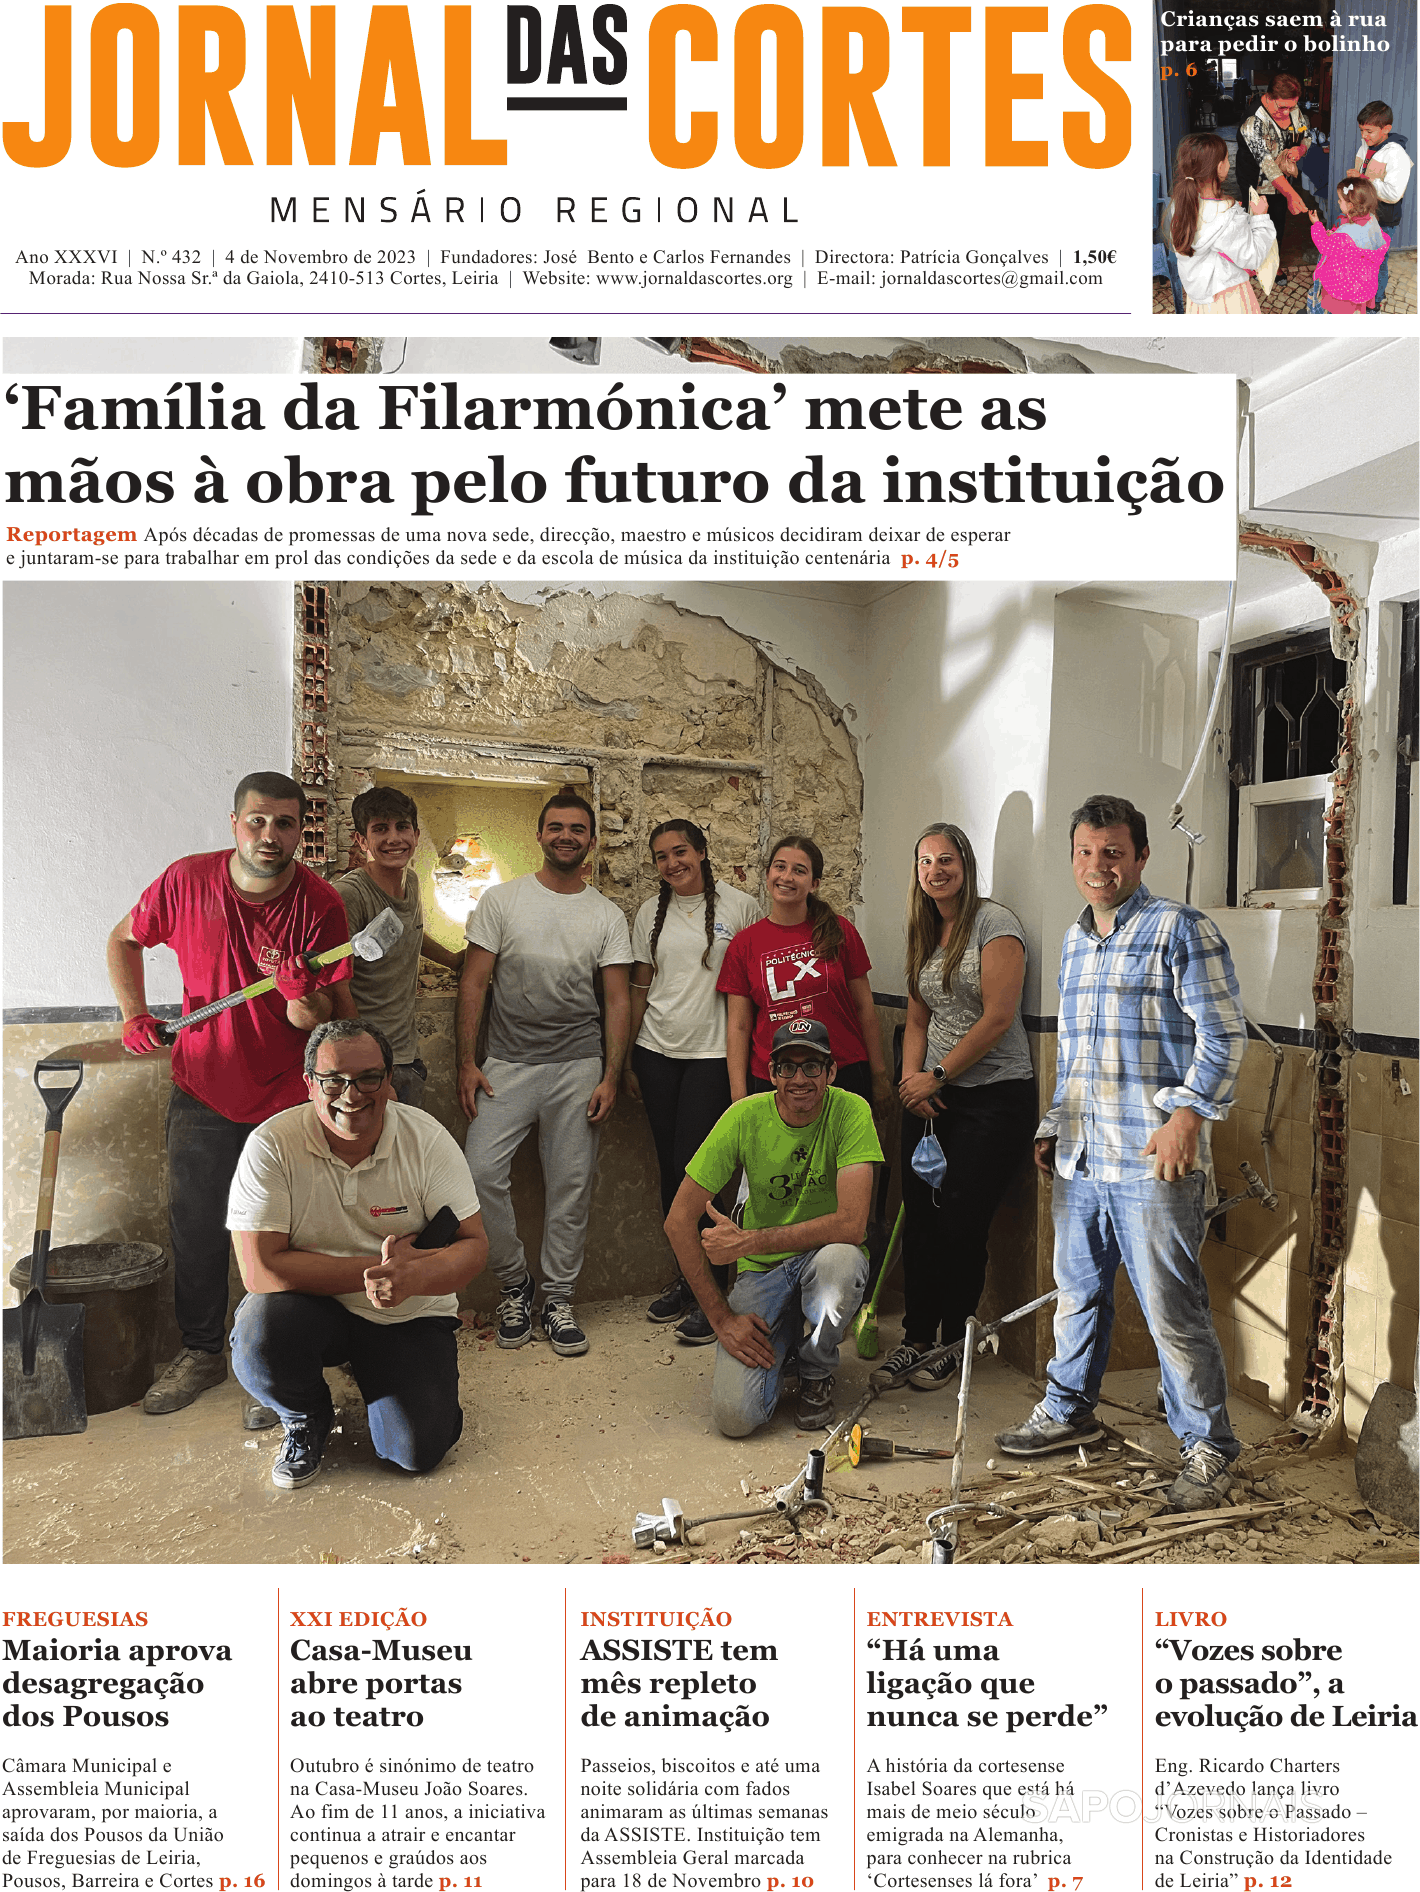 Jornal das Cortes